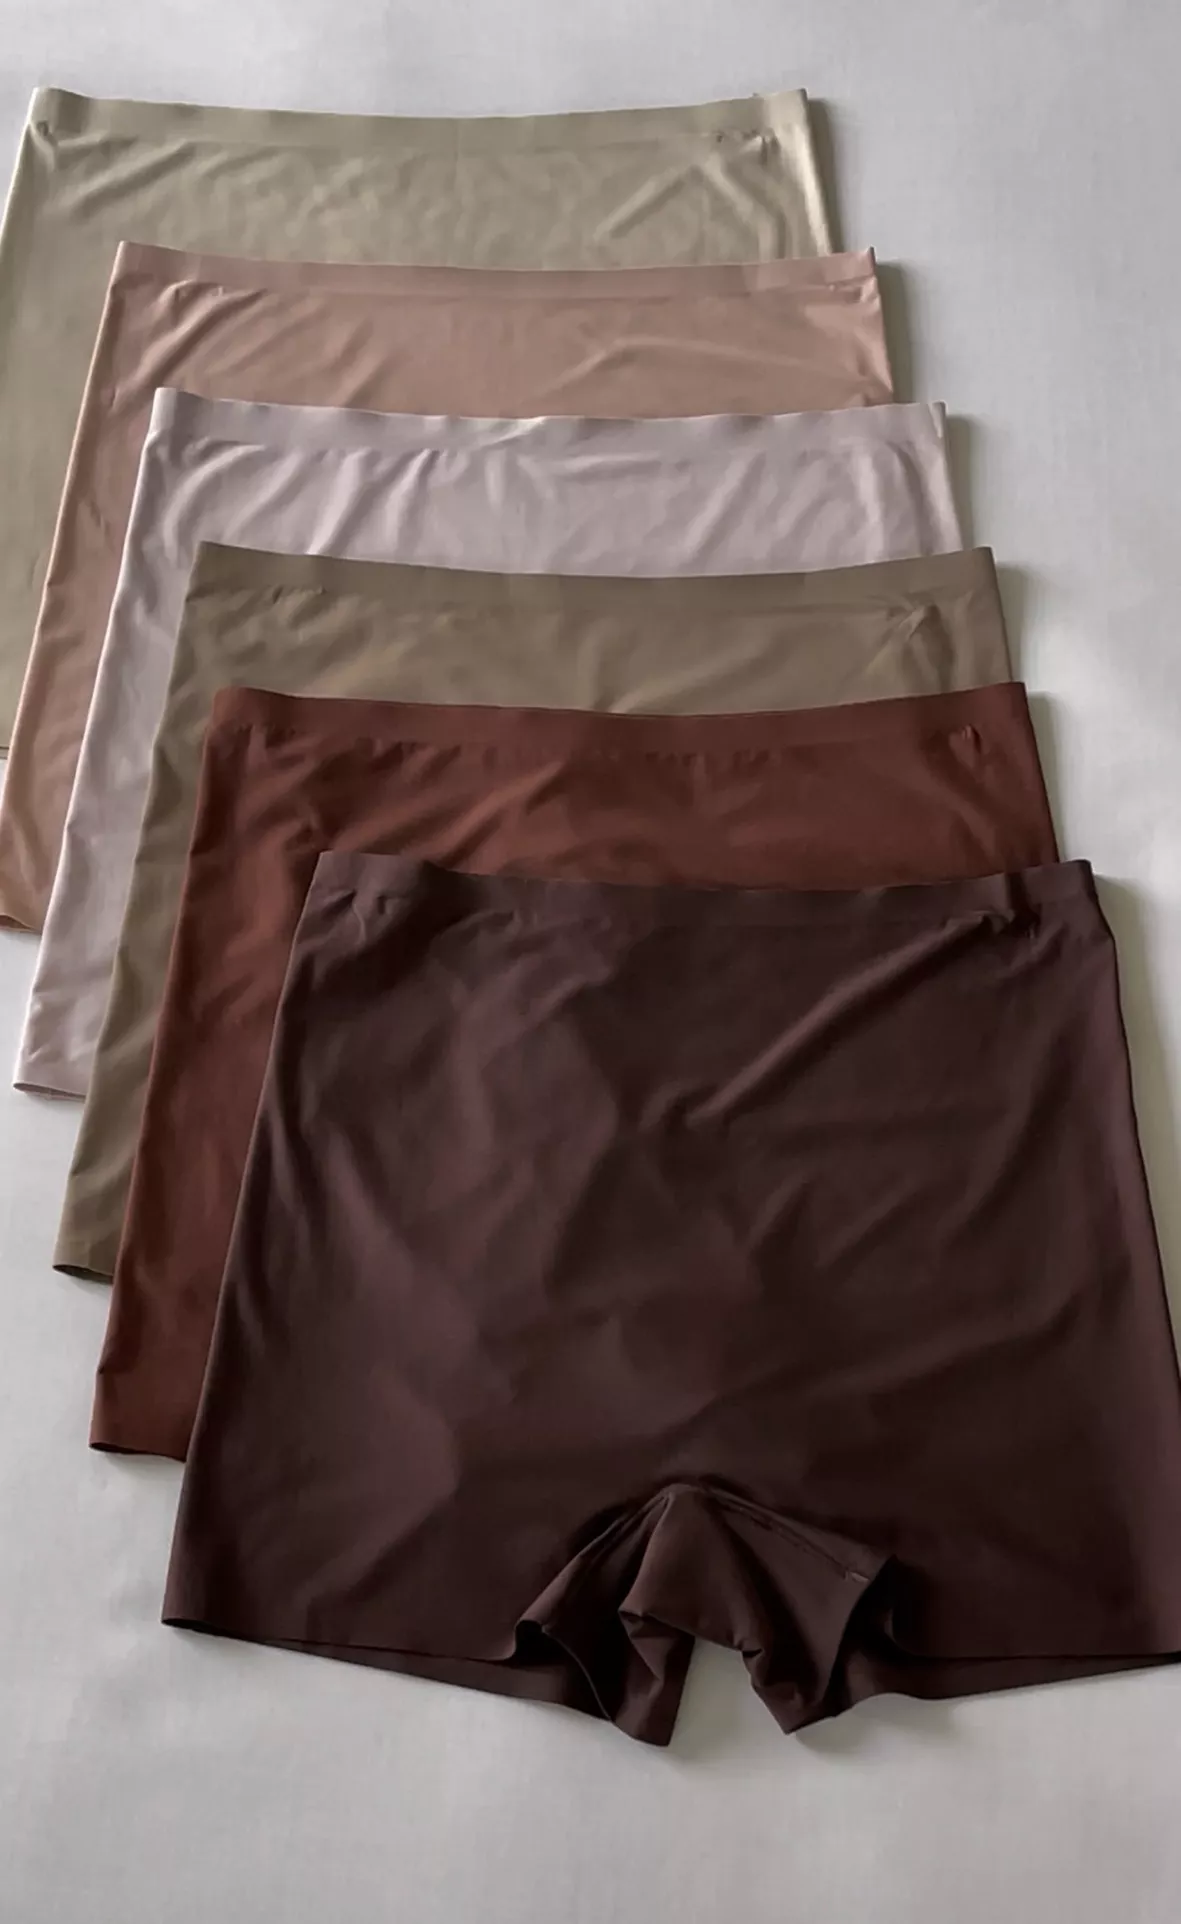 SHARICCA BoyShorts Panties for Women Seamless Soft Boy Shorts